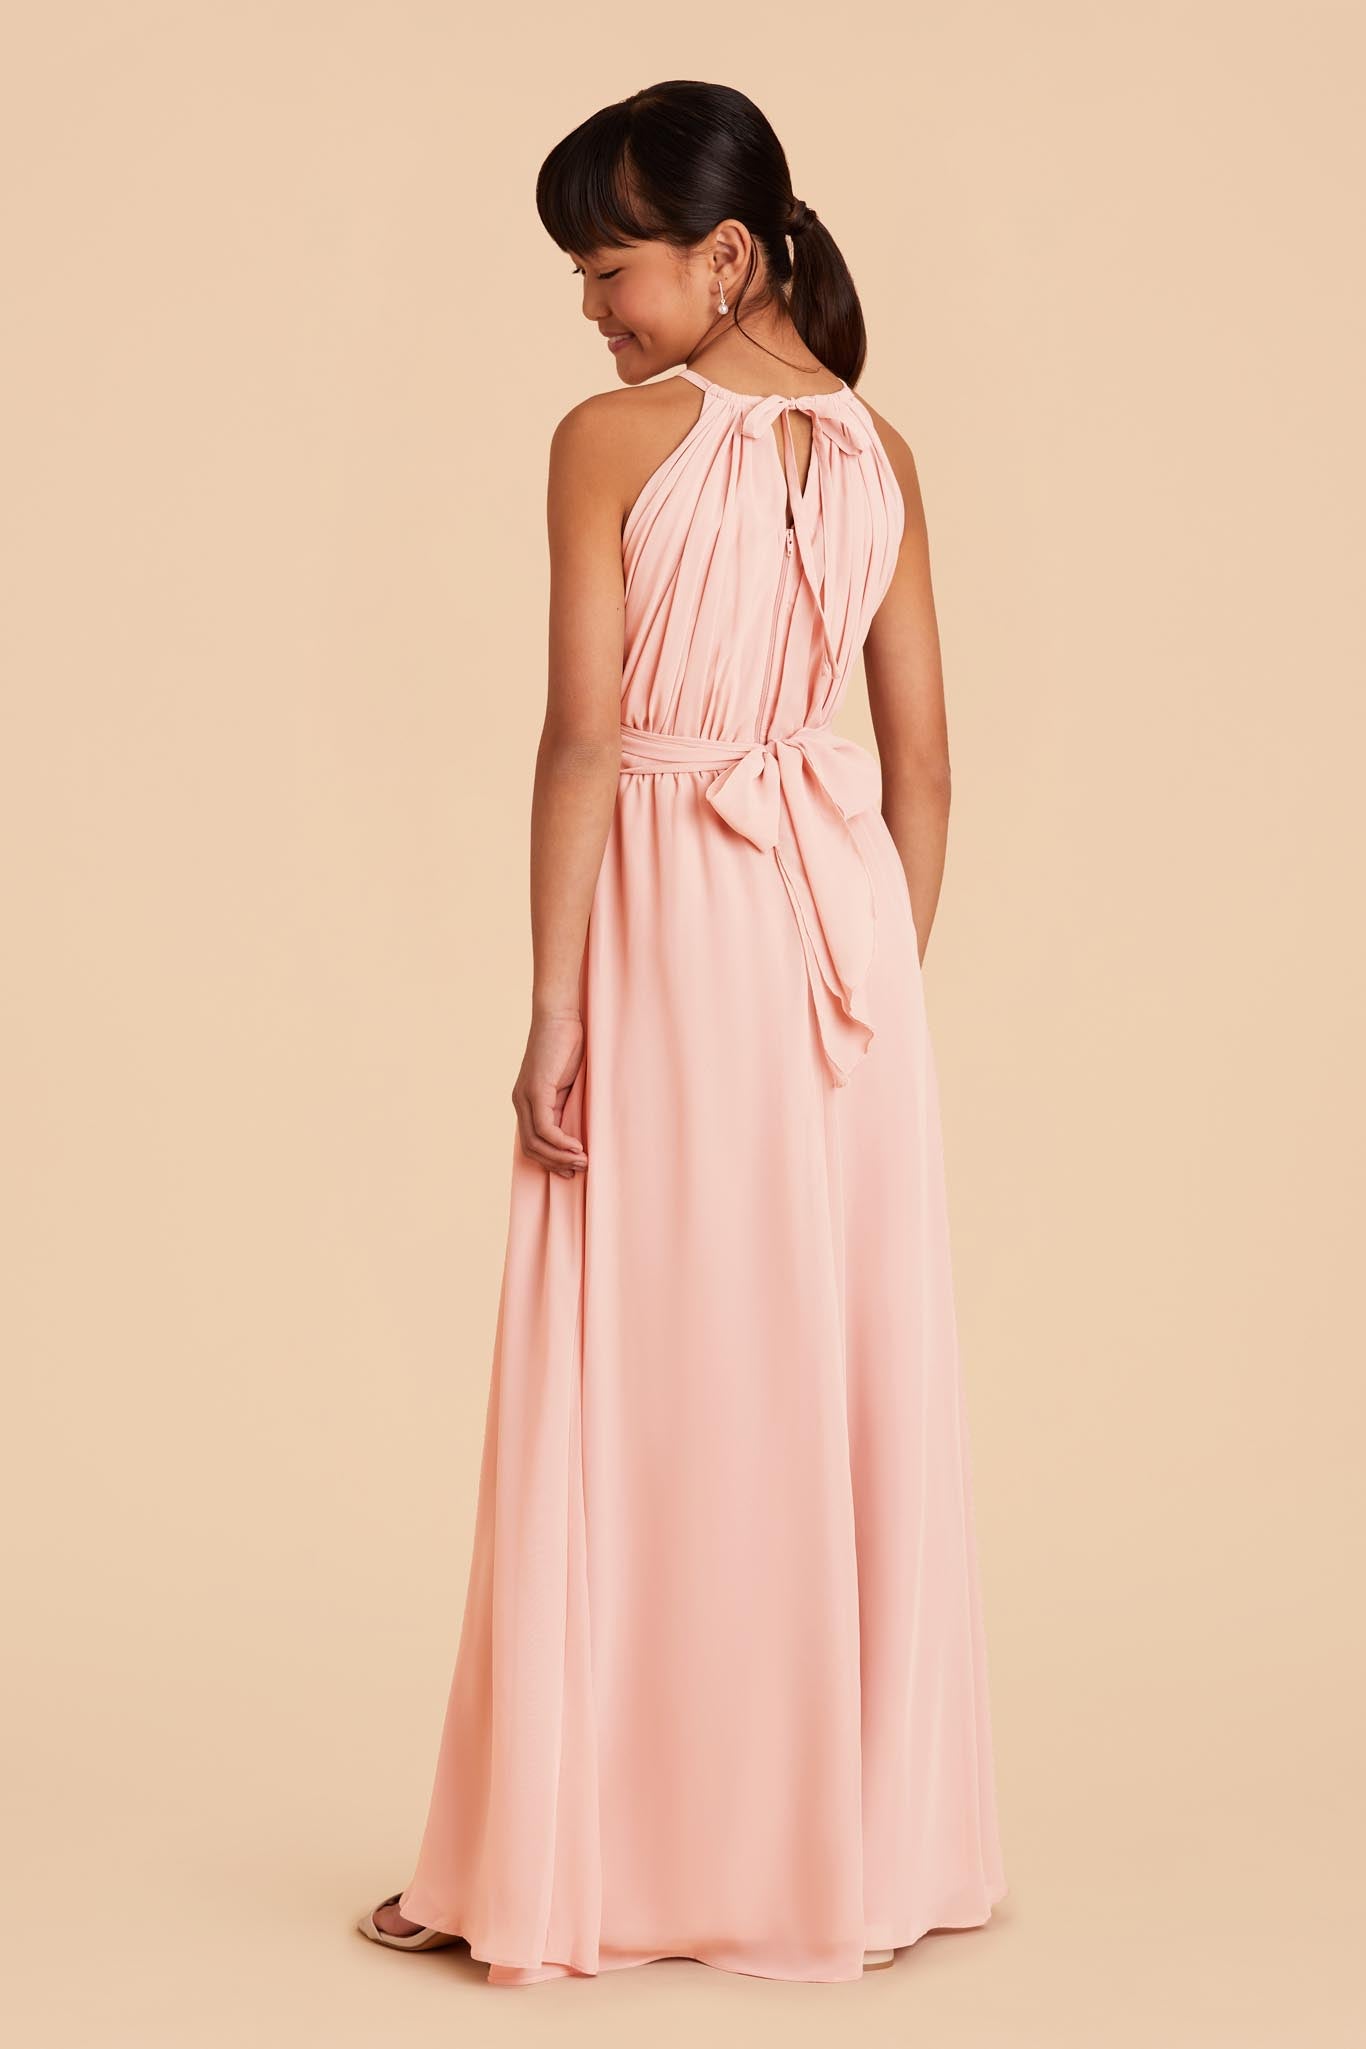 Blush Pink Sienna Junior Dress by Birdy Grey